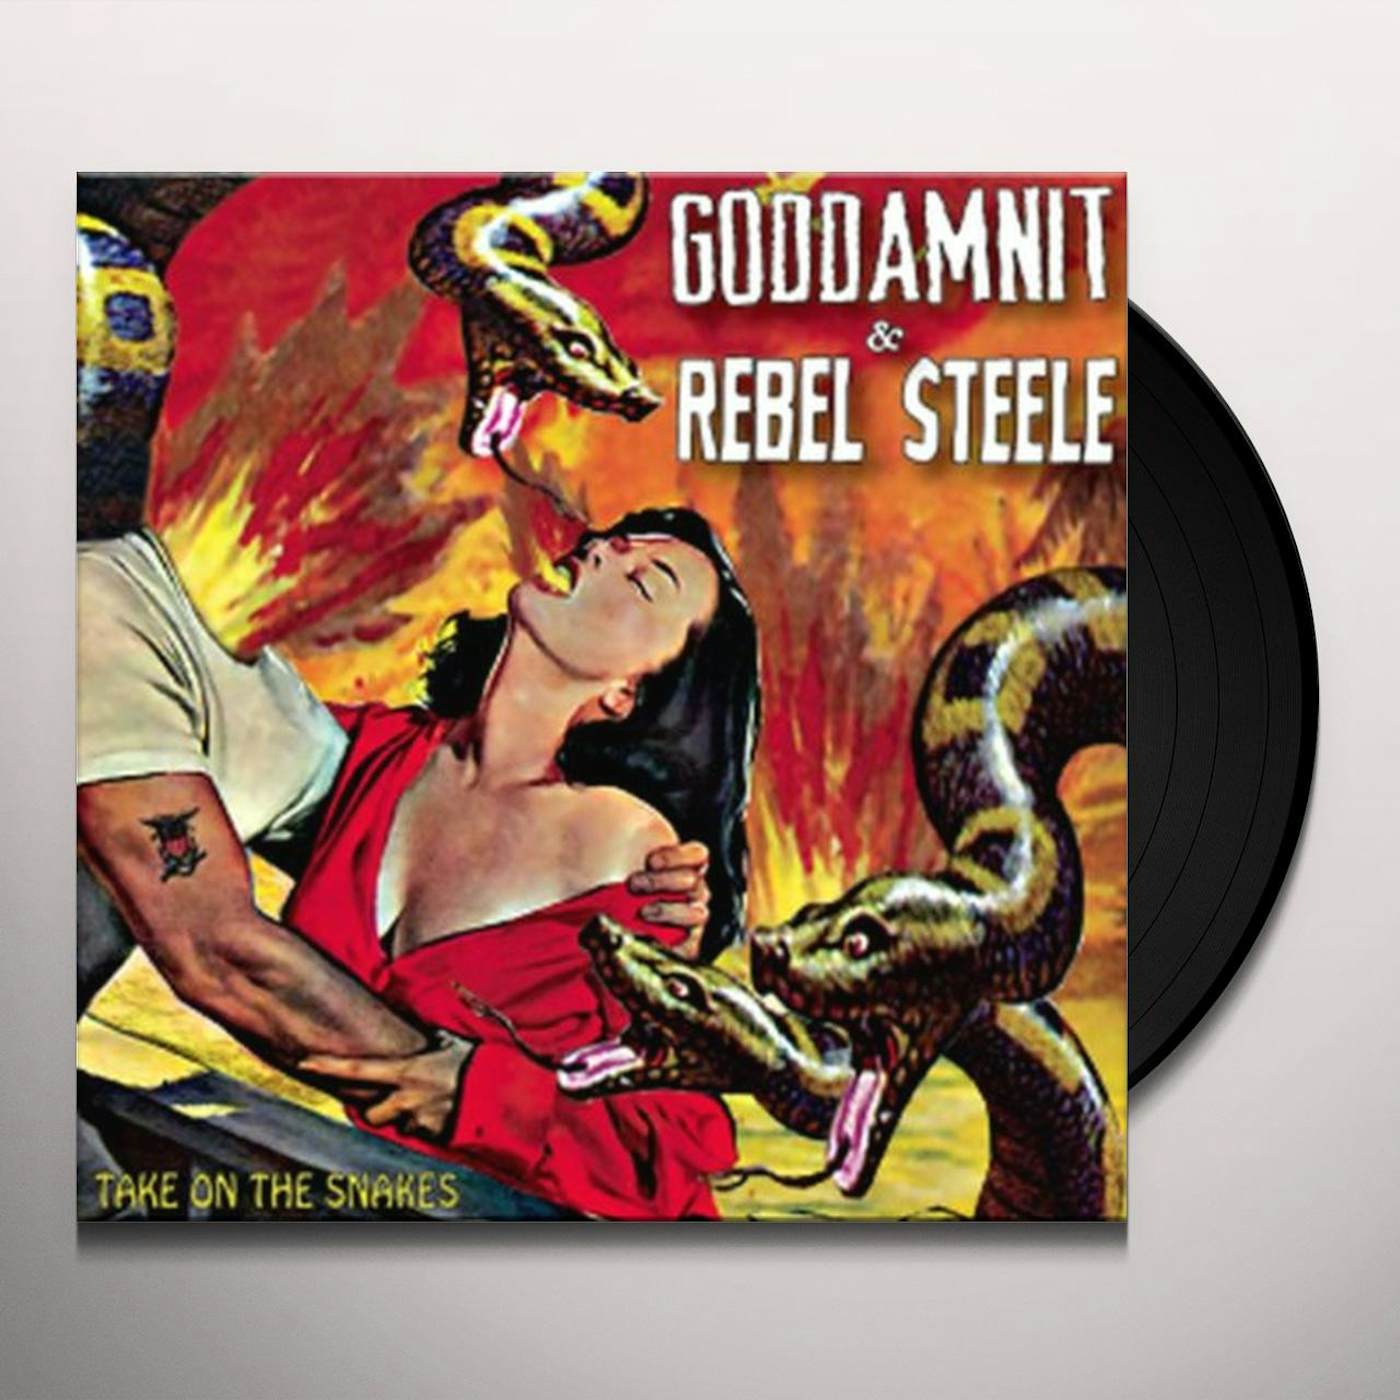 Goddamnit / Rebel Steele TAKE ON THE SNAKES Vinyl Record